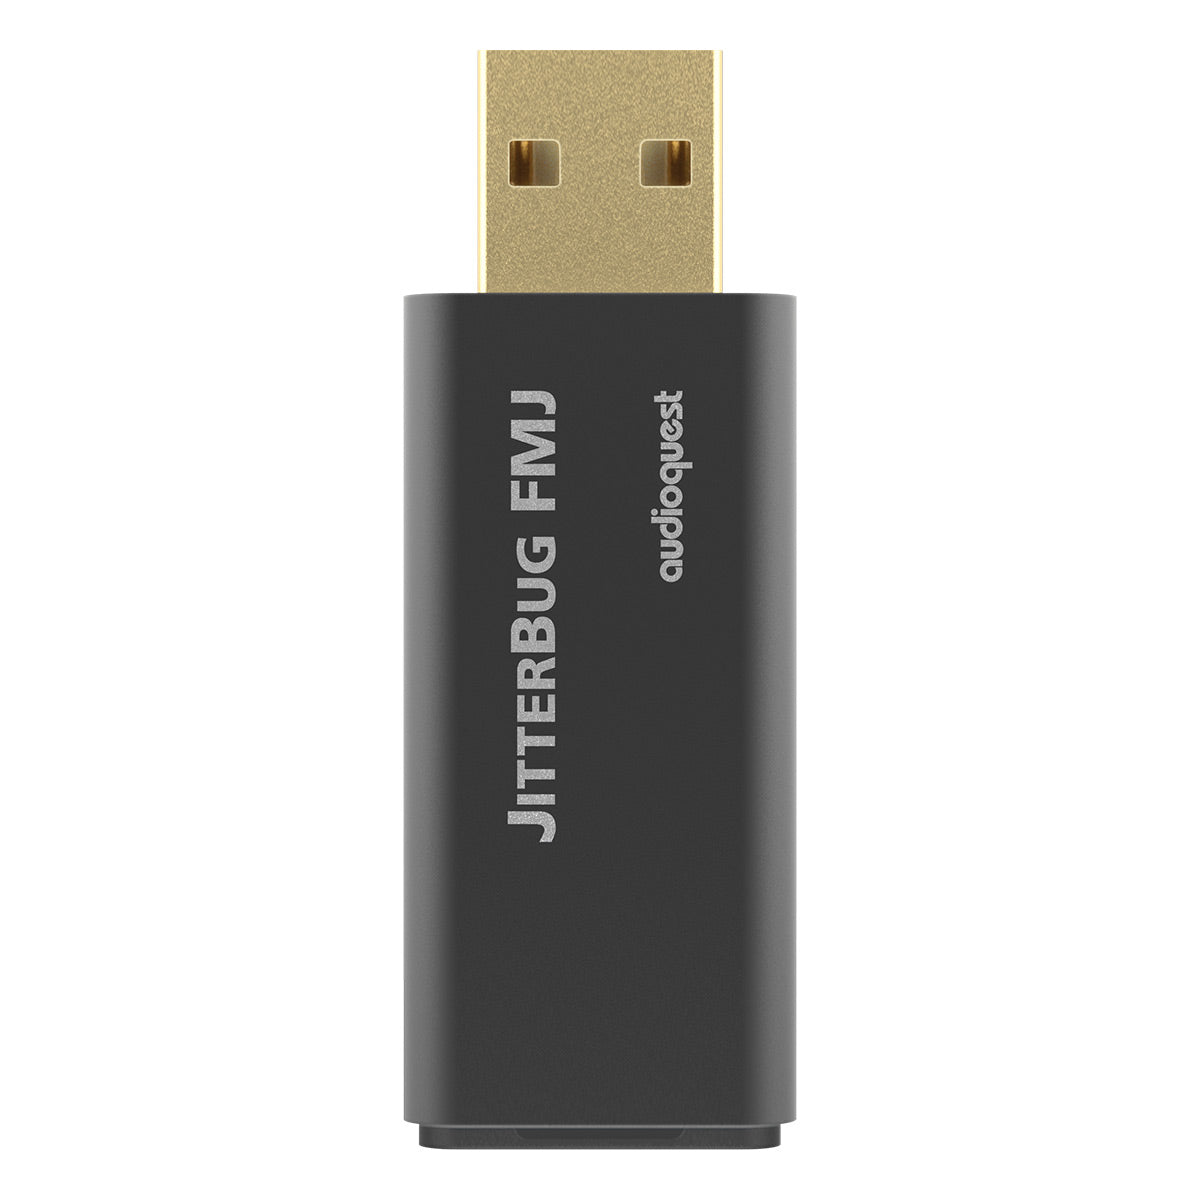 AudioQuest JitterBug FMJ USB 2.0 Power & Noise-Filter